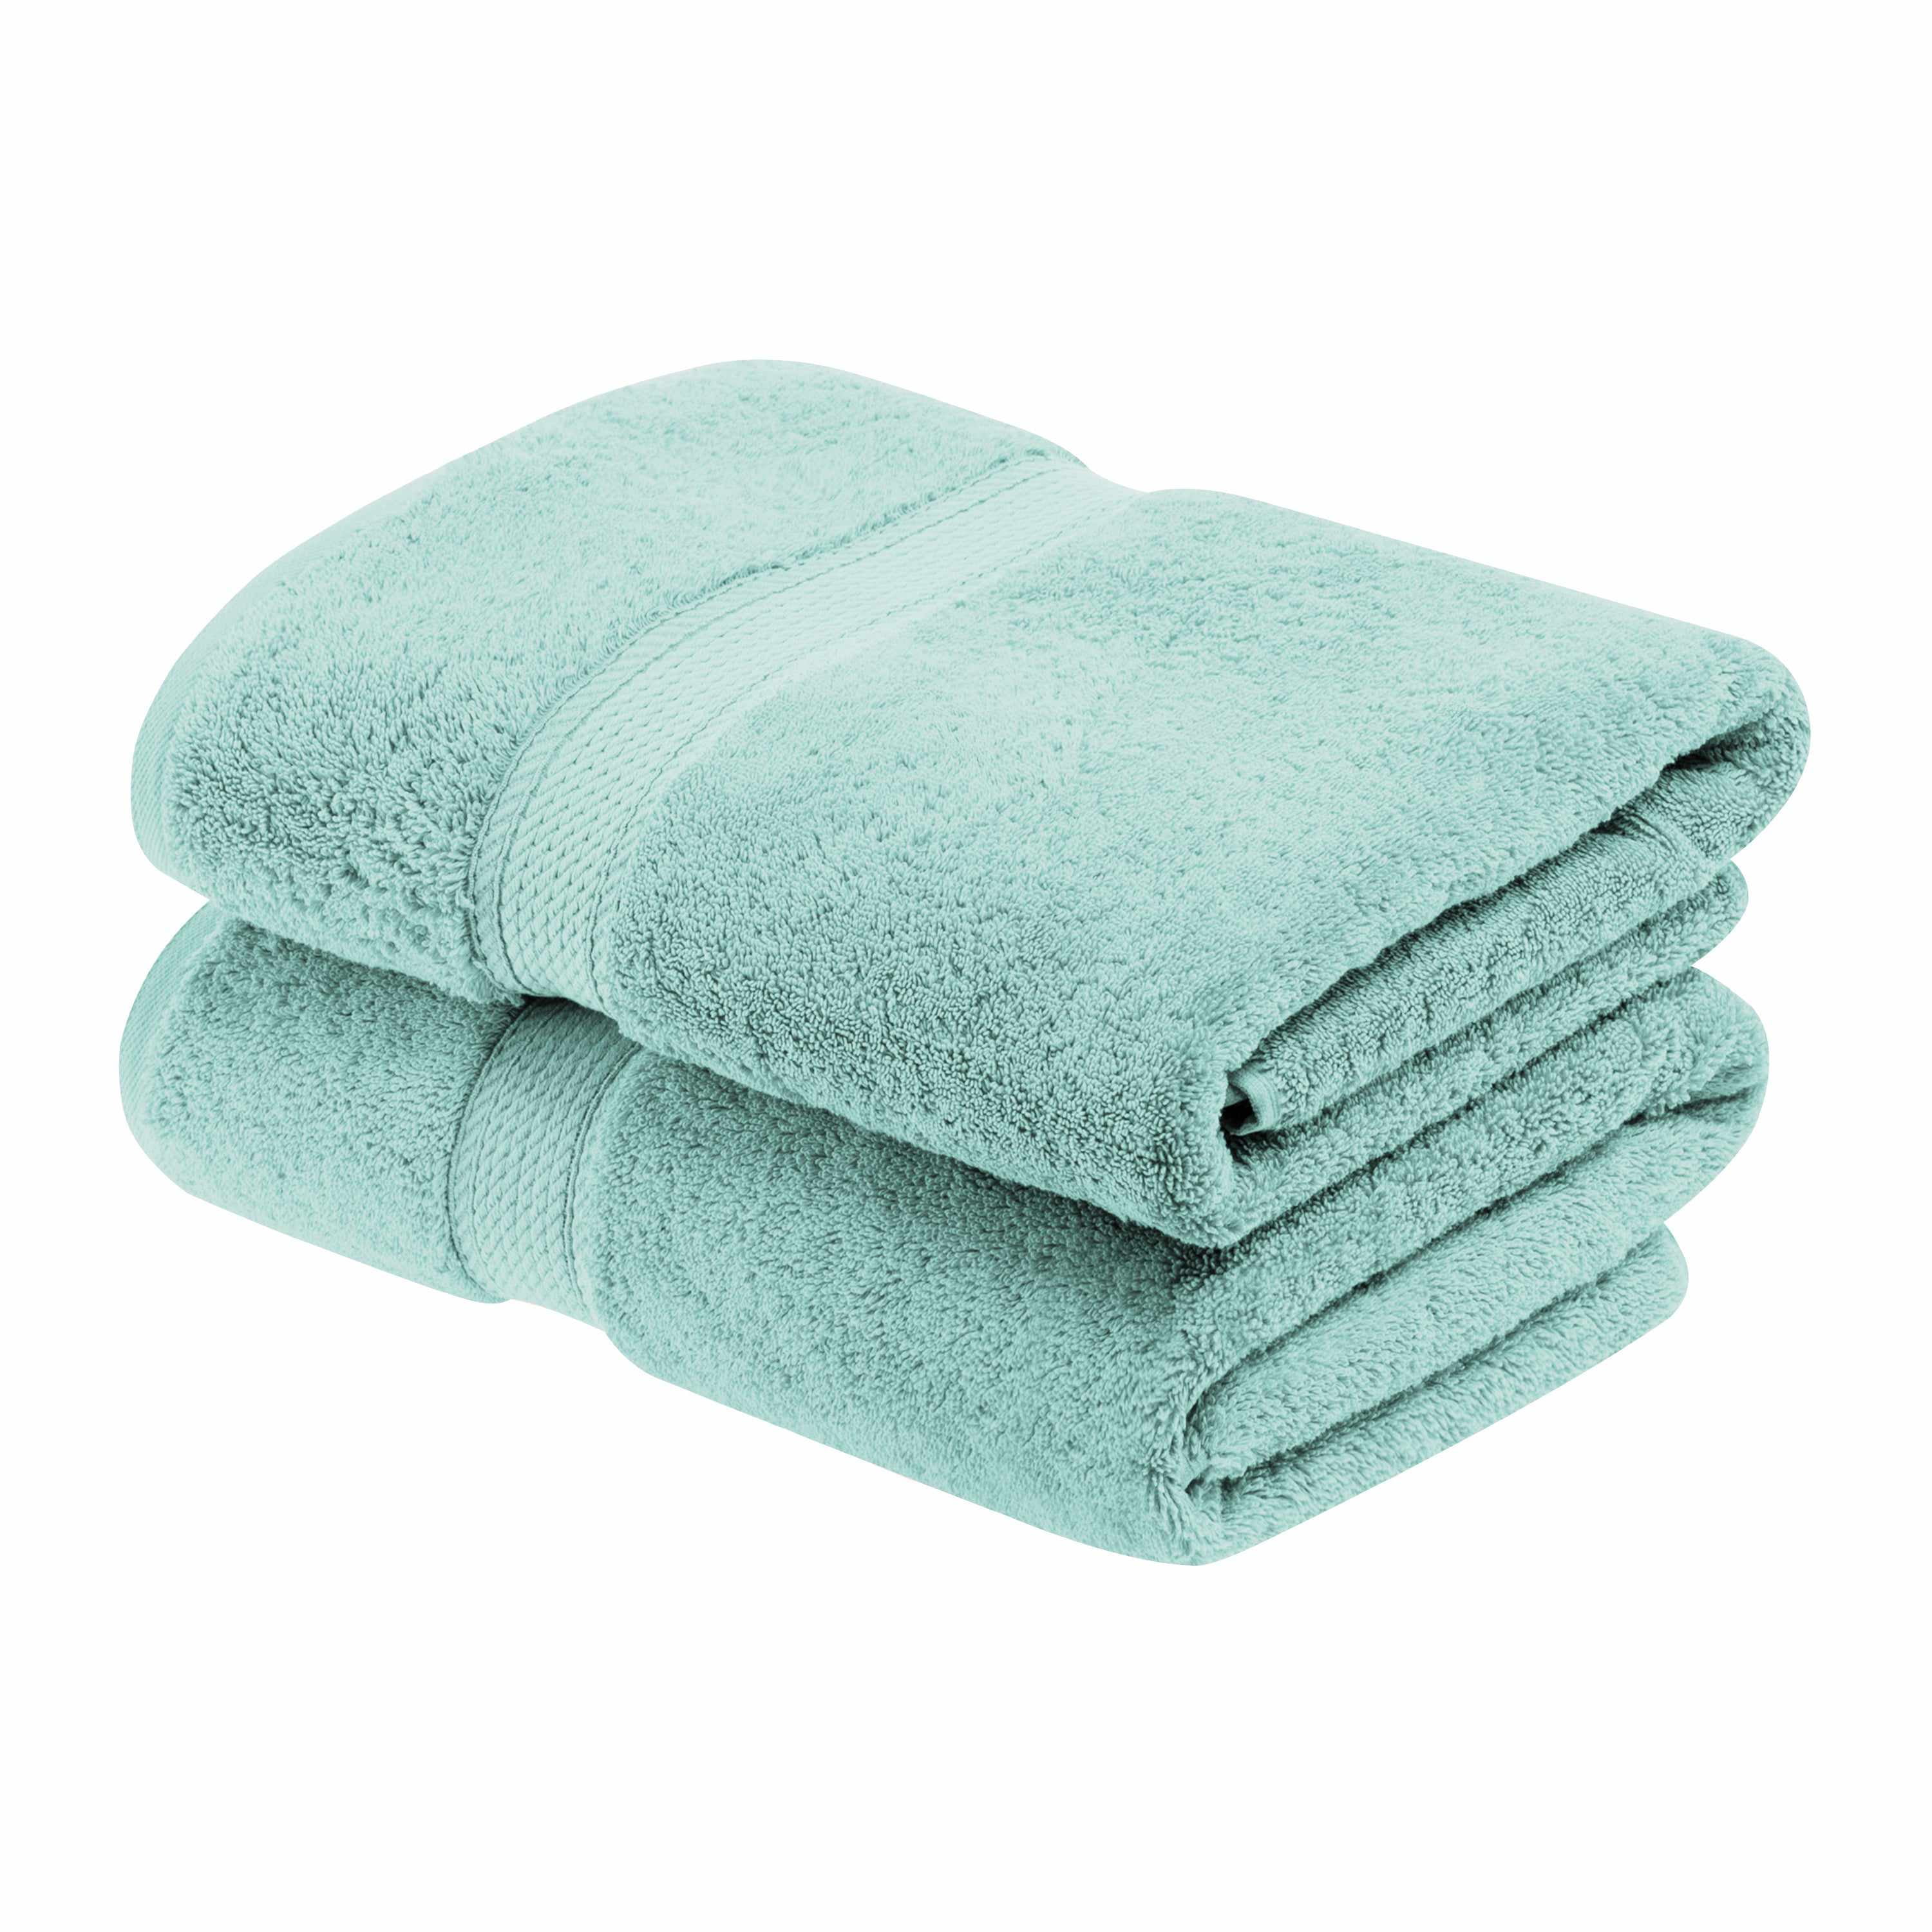 eLuxury 900 GSM 8 Piece 100% Cotton Bath Towel Set, White